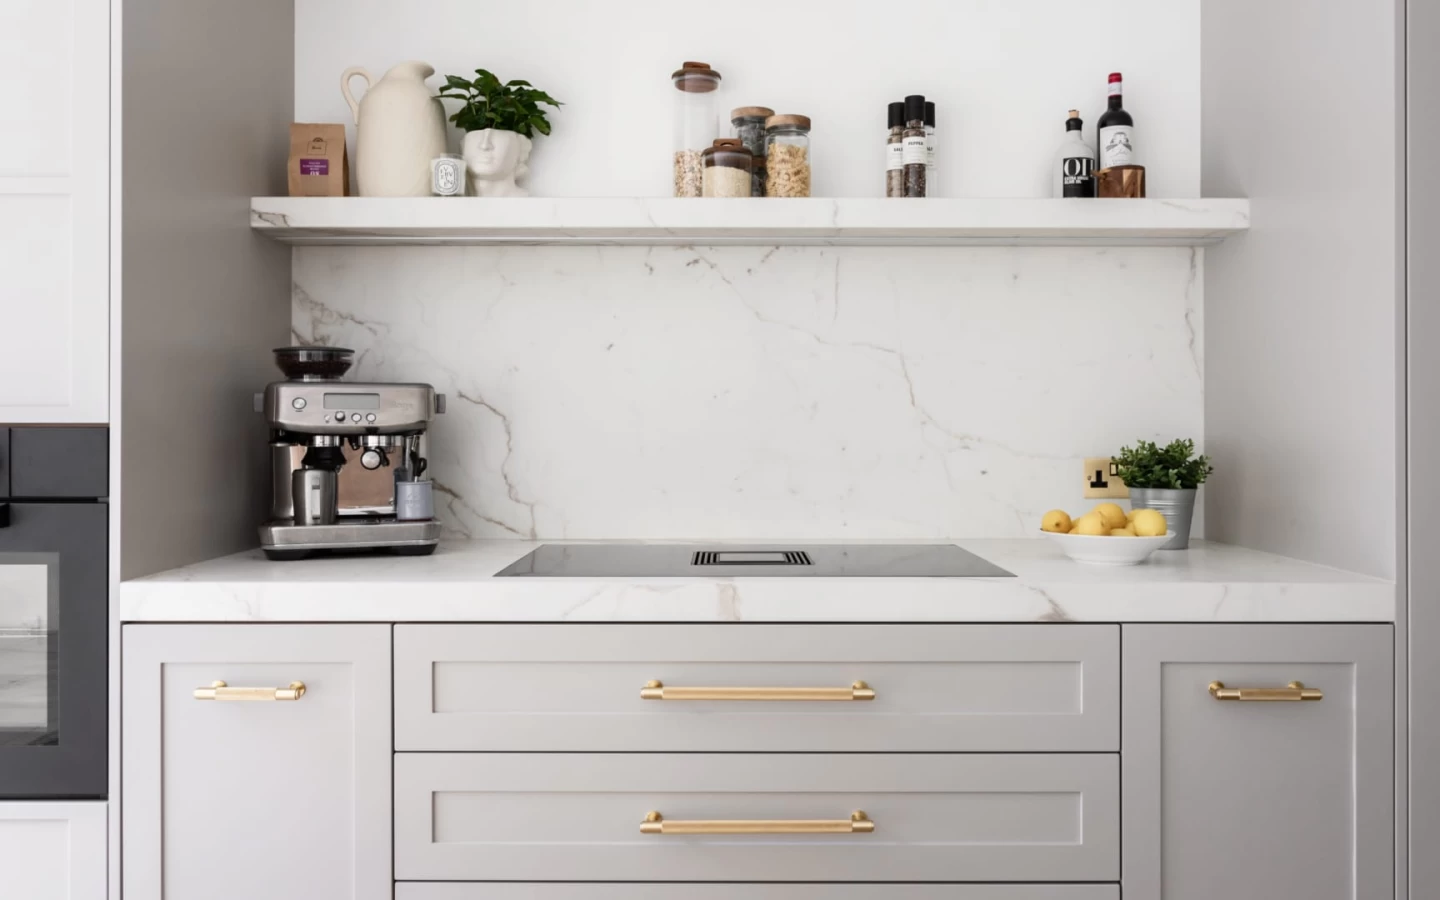 Kitchen countertop and backsplash in Calacatta marble-effect stoneware by Atlas Plan